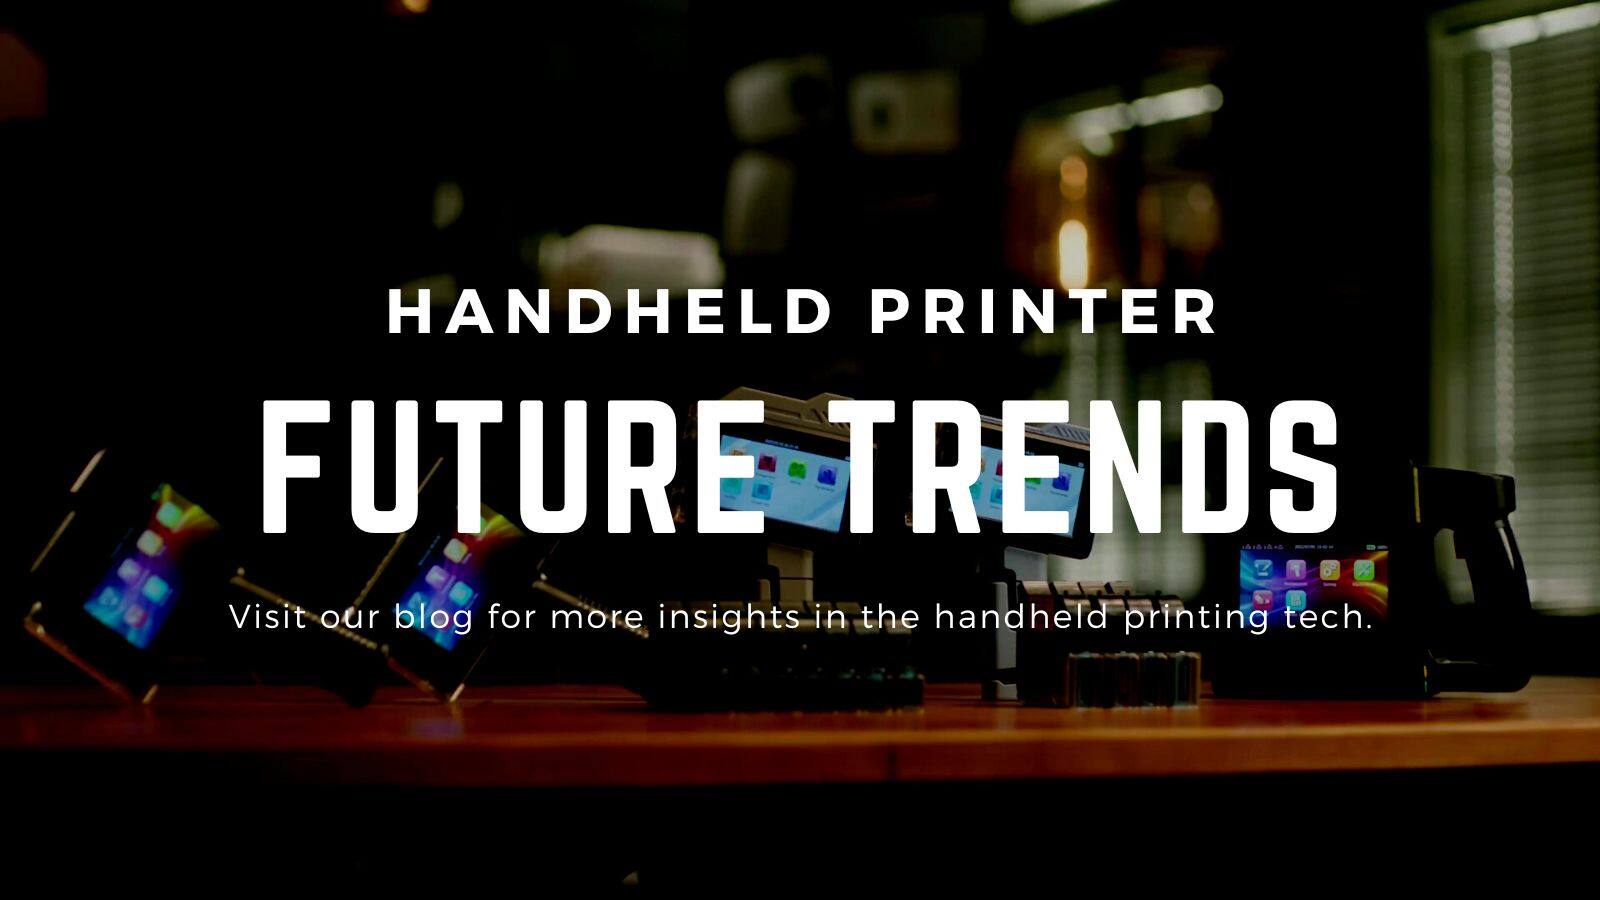 Future trends of handheld inkjet printer